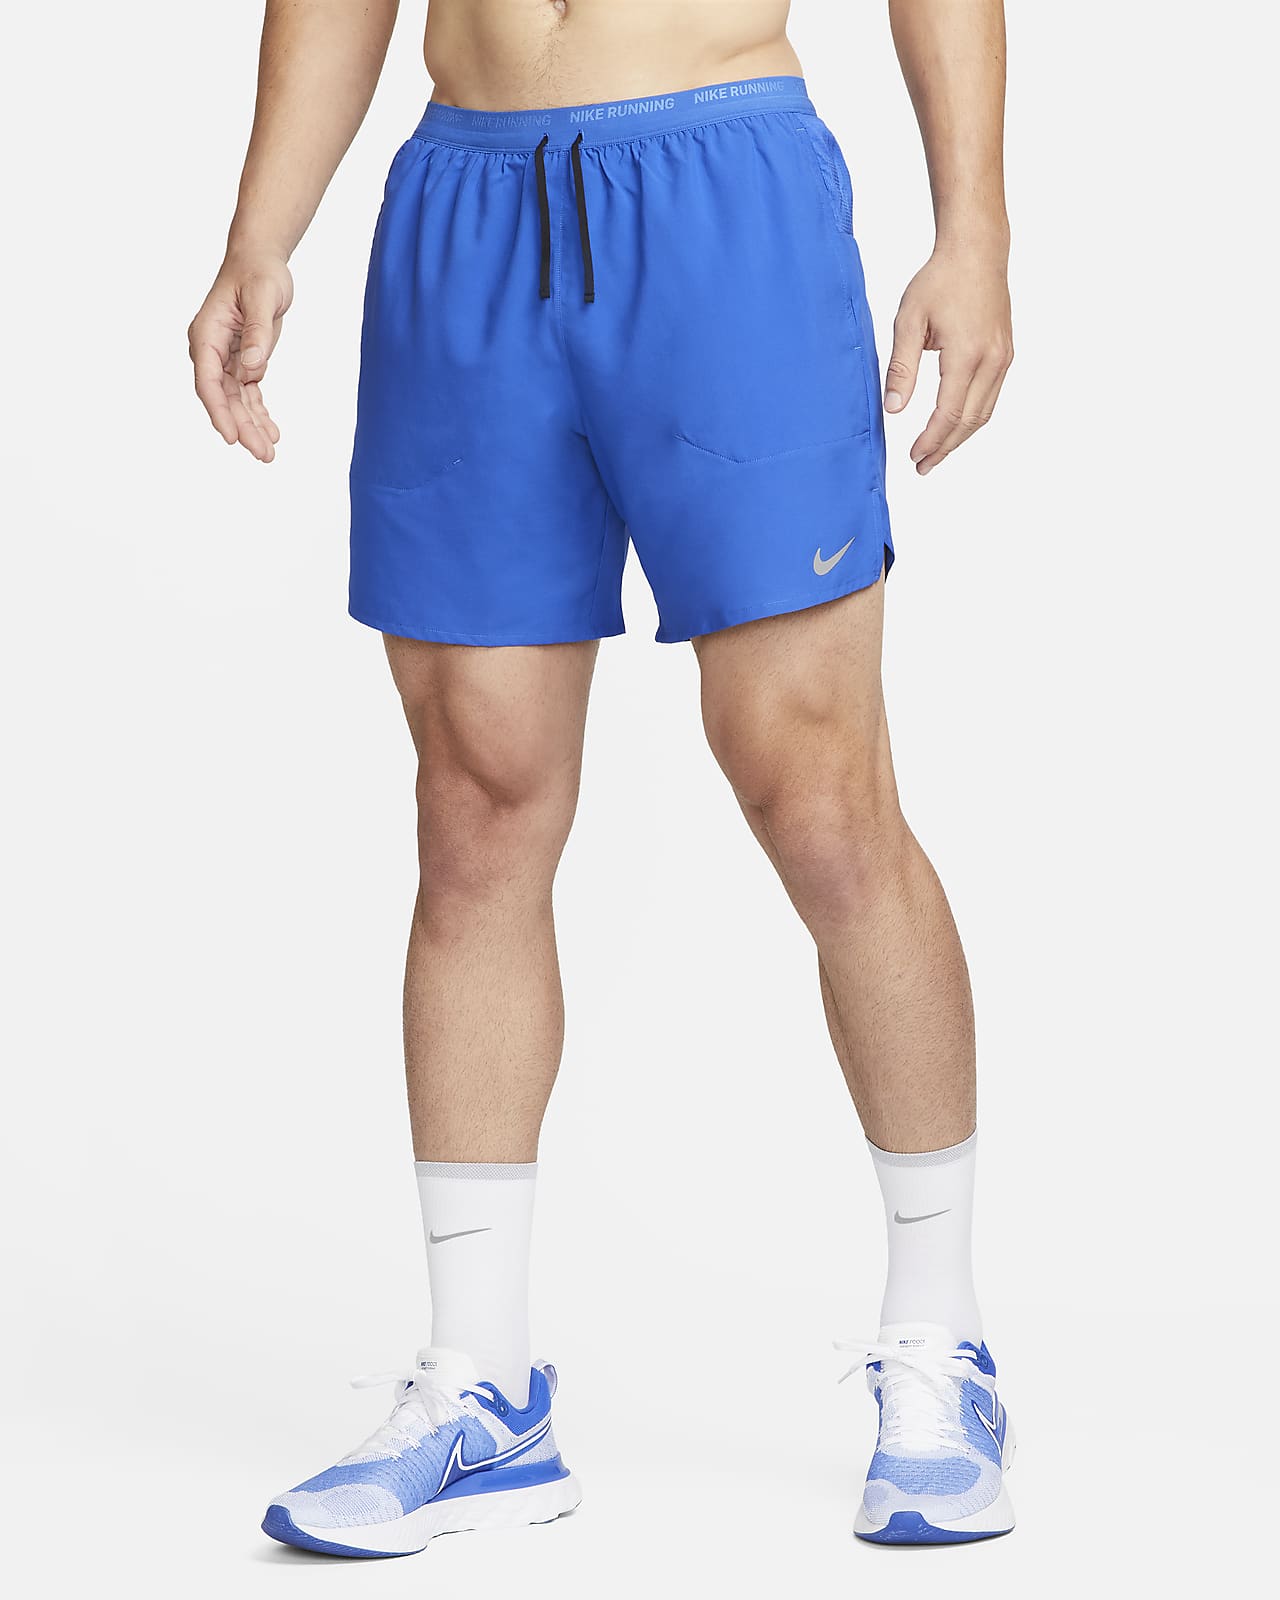 Shorts de de 18 cm ropa interior para hombre Nike Dri-FIT Nike.com